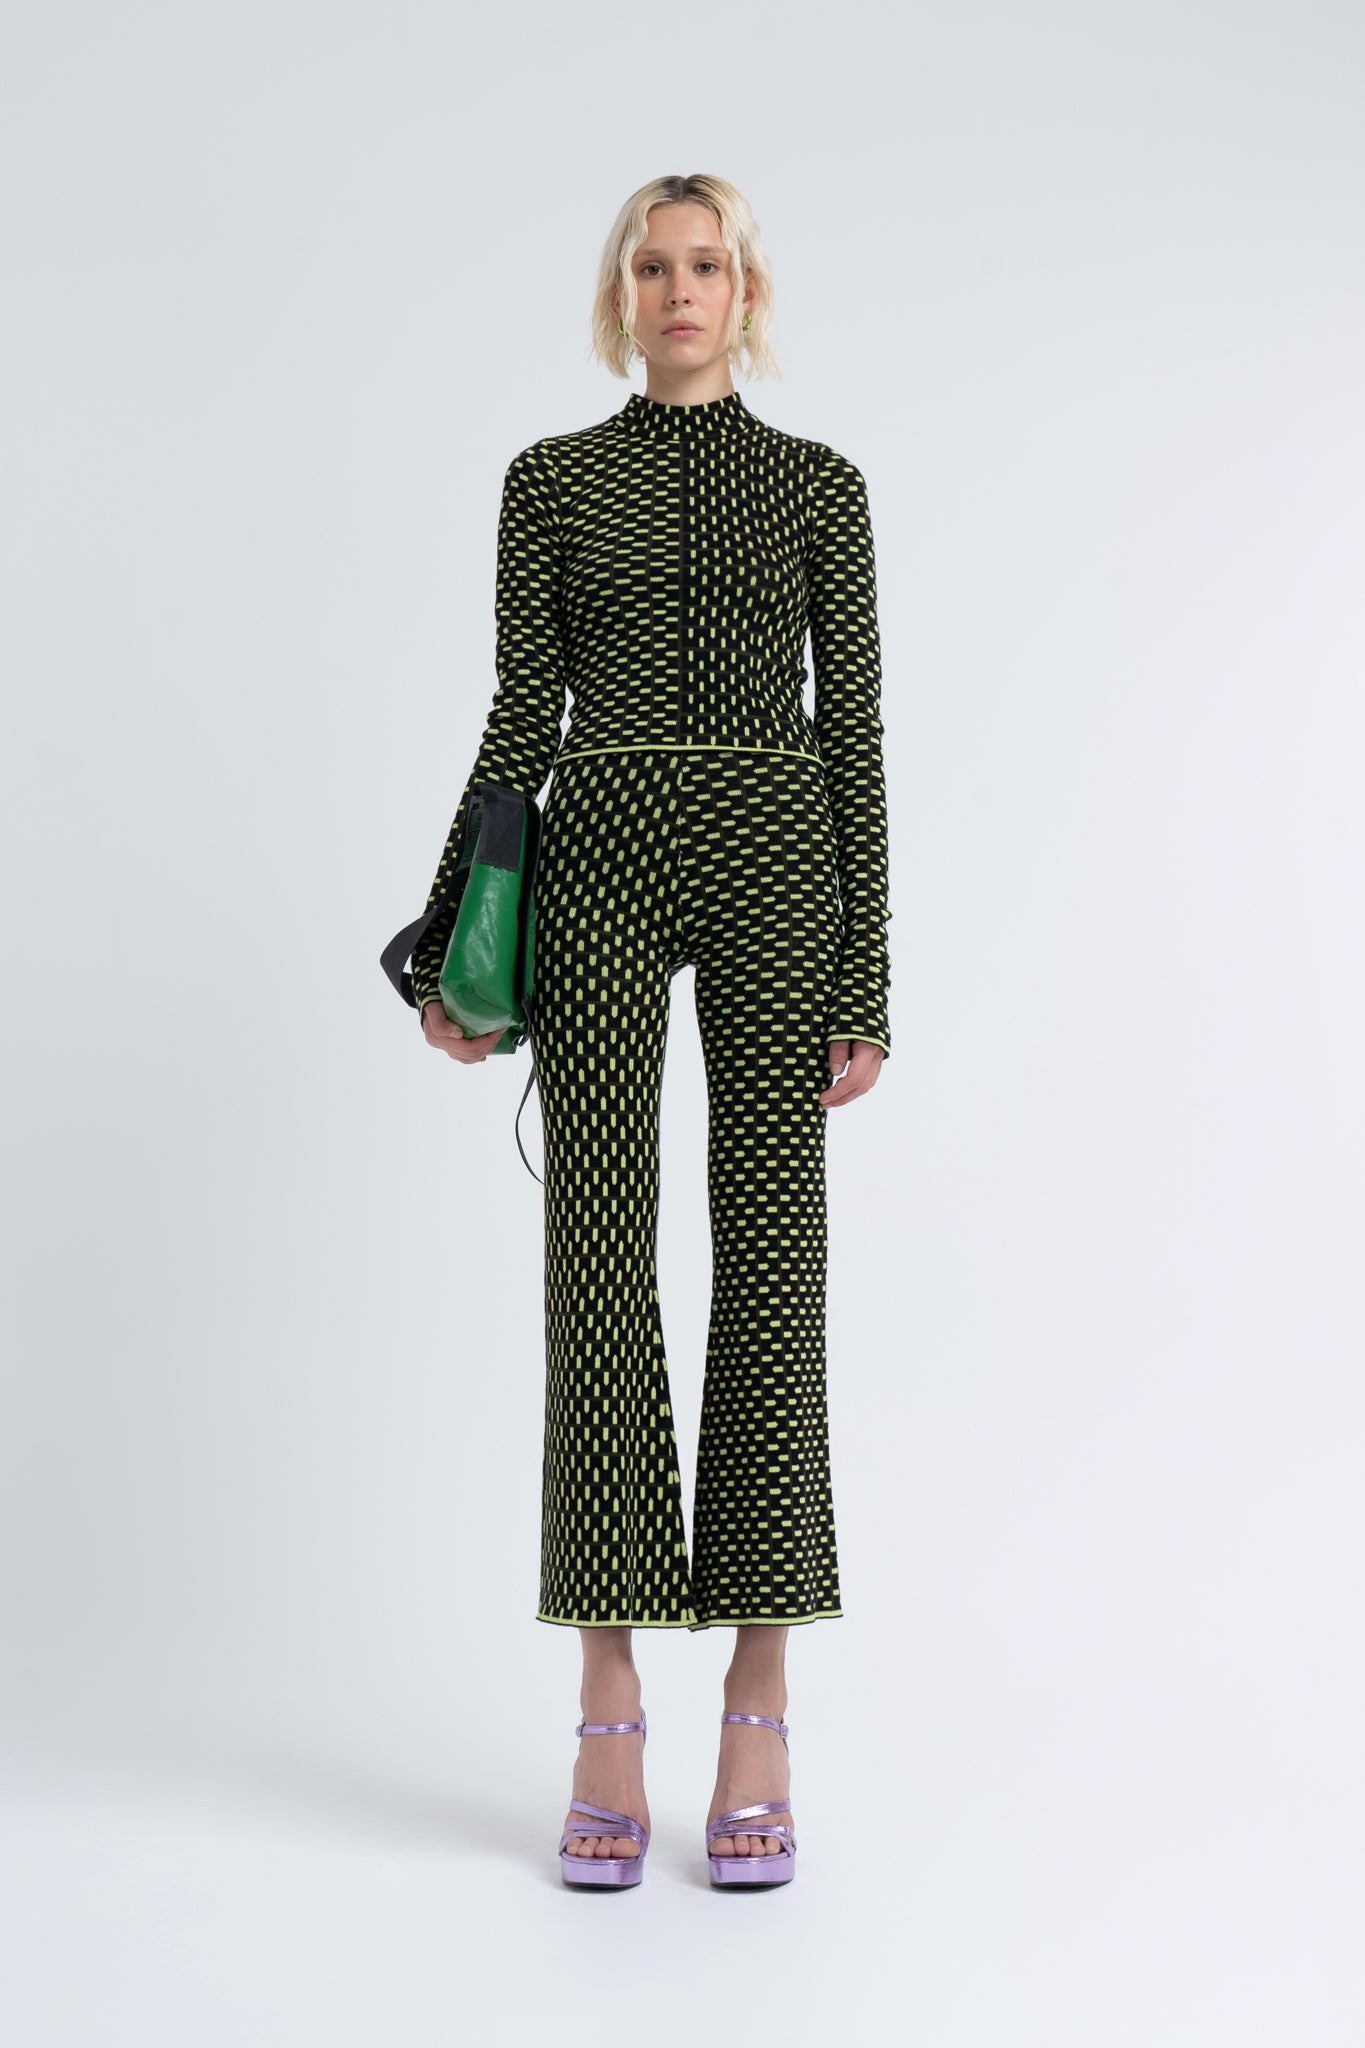 Arthur Apparel Black with Neon Green Dots Cotton Knit Elastic Waist Crop Flare Pant